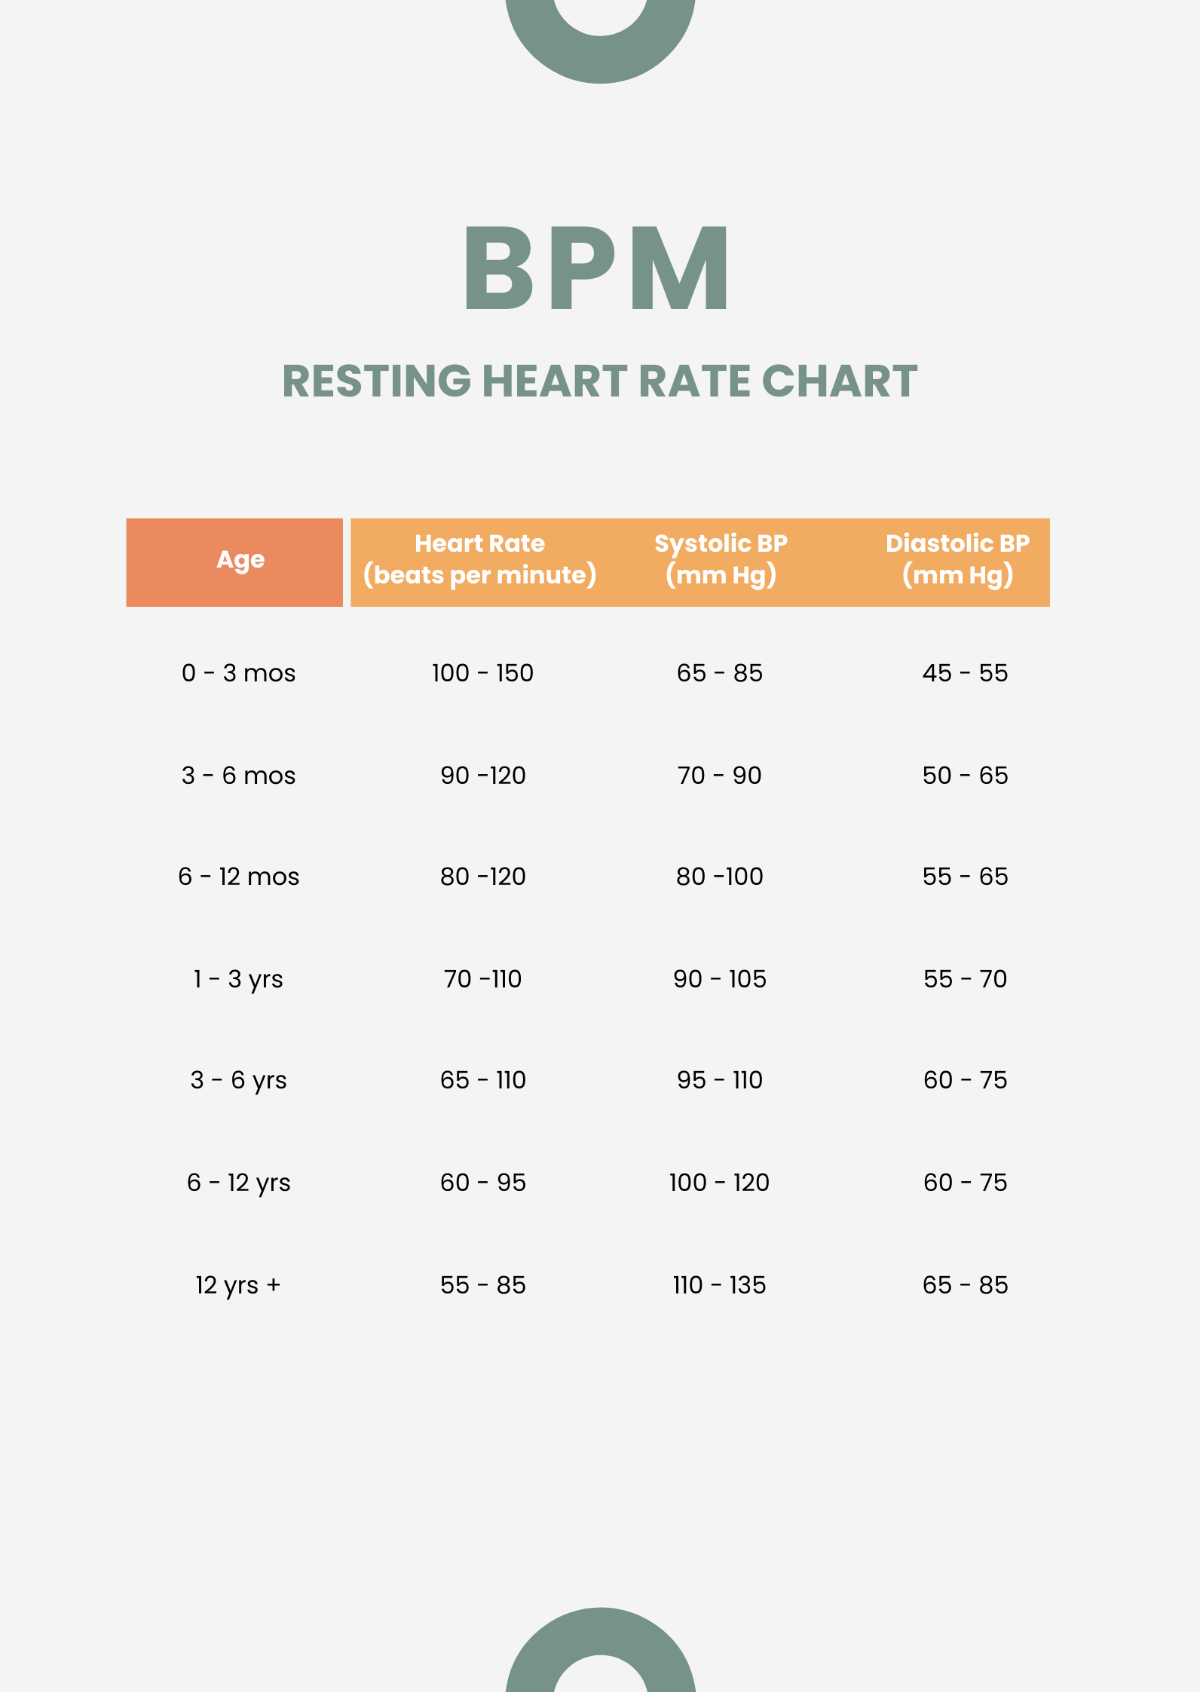 BPM Resting Heart Rate Chart Template